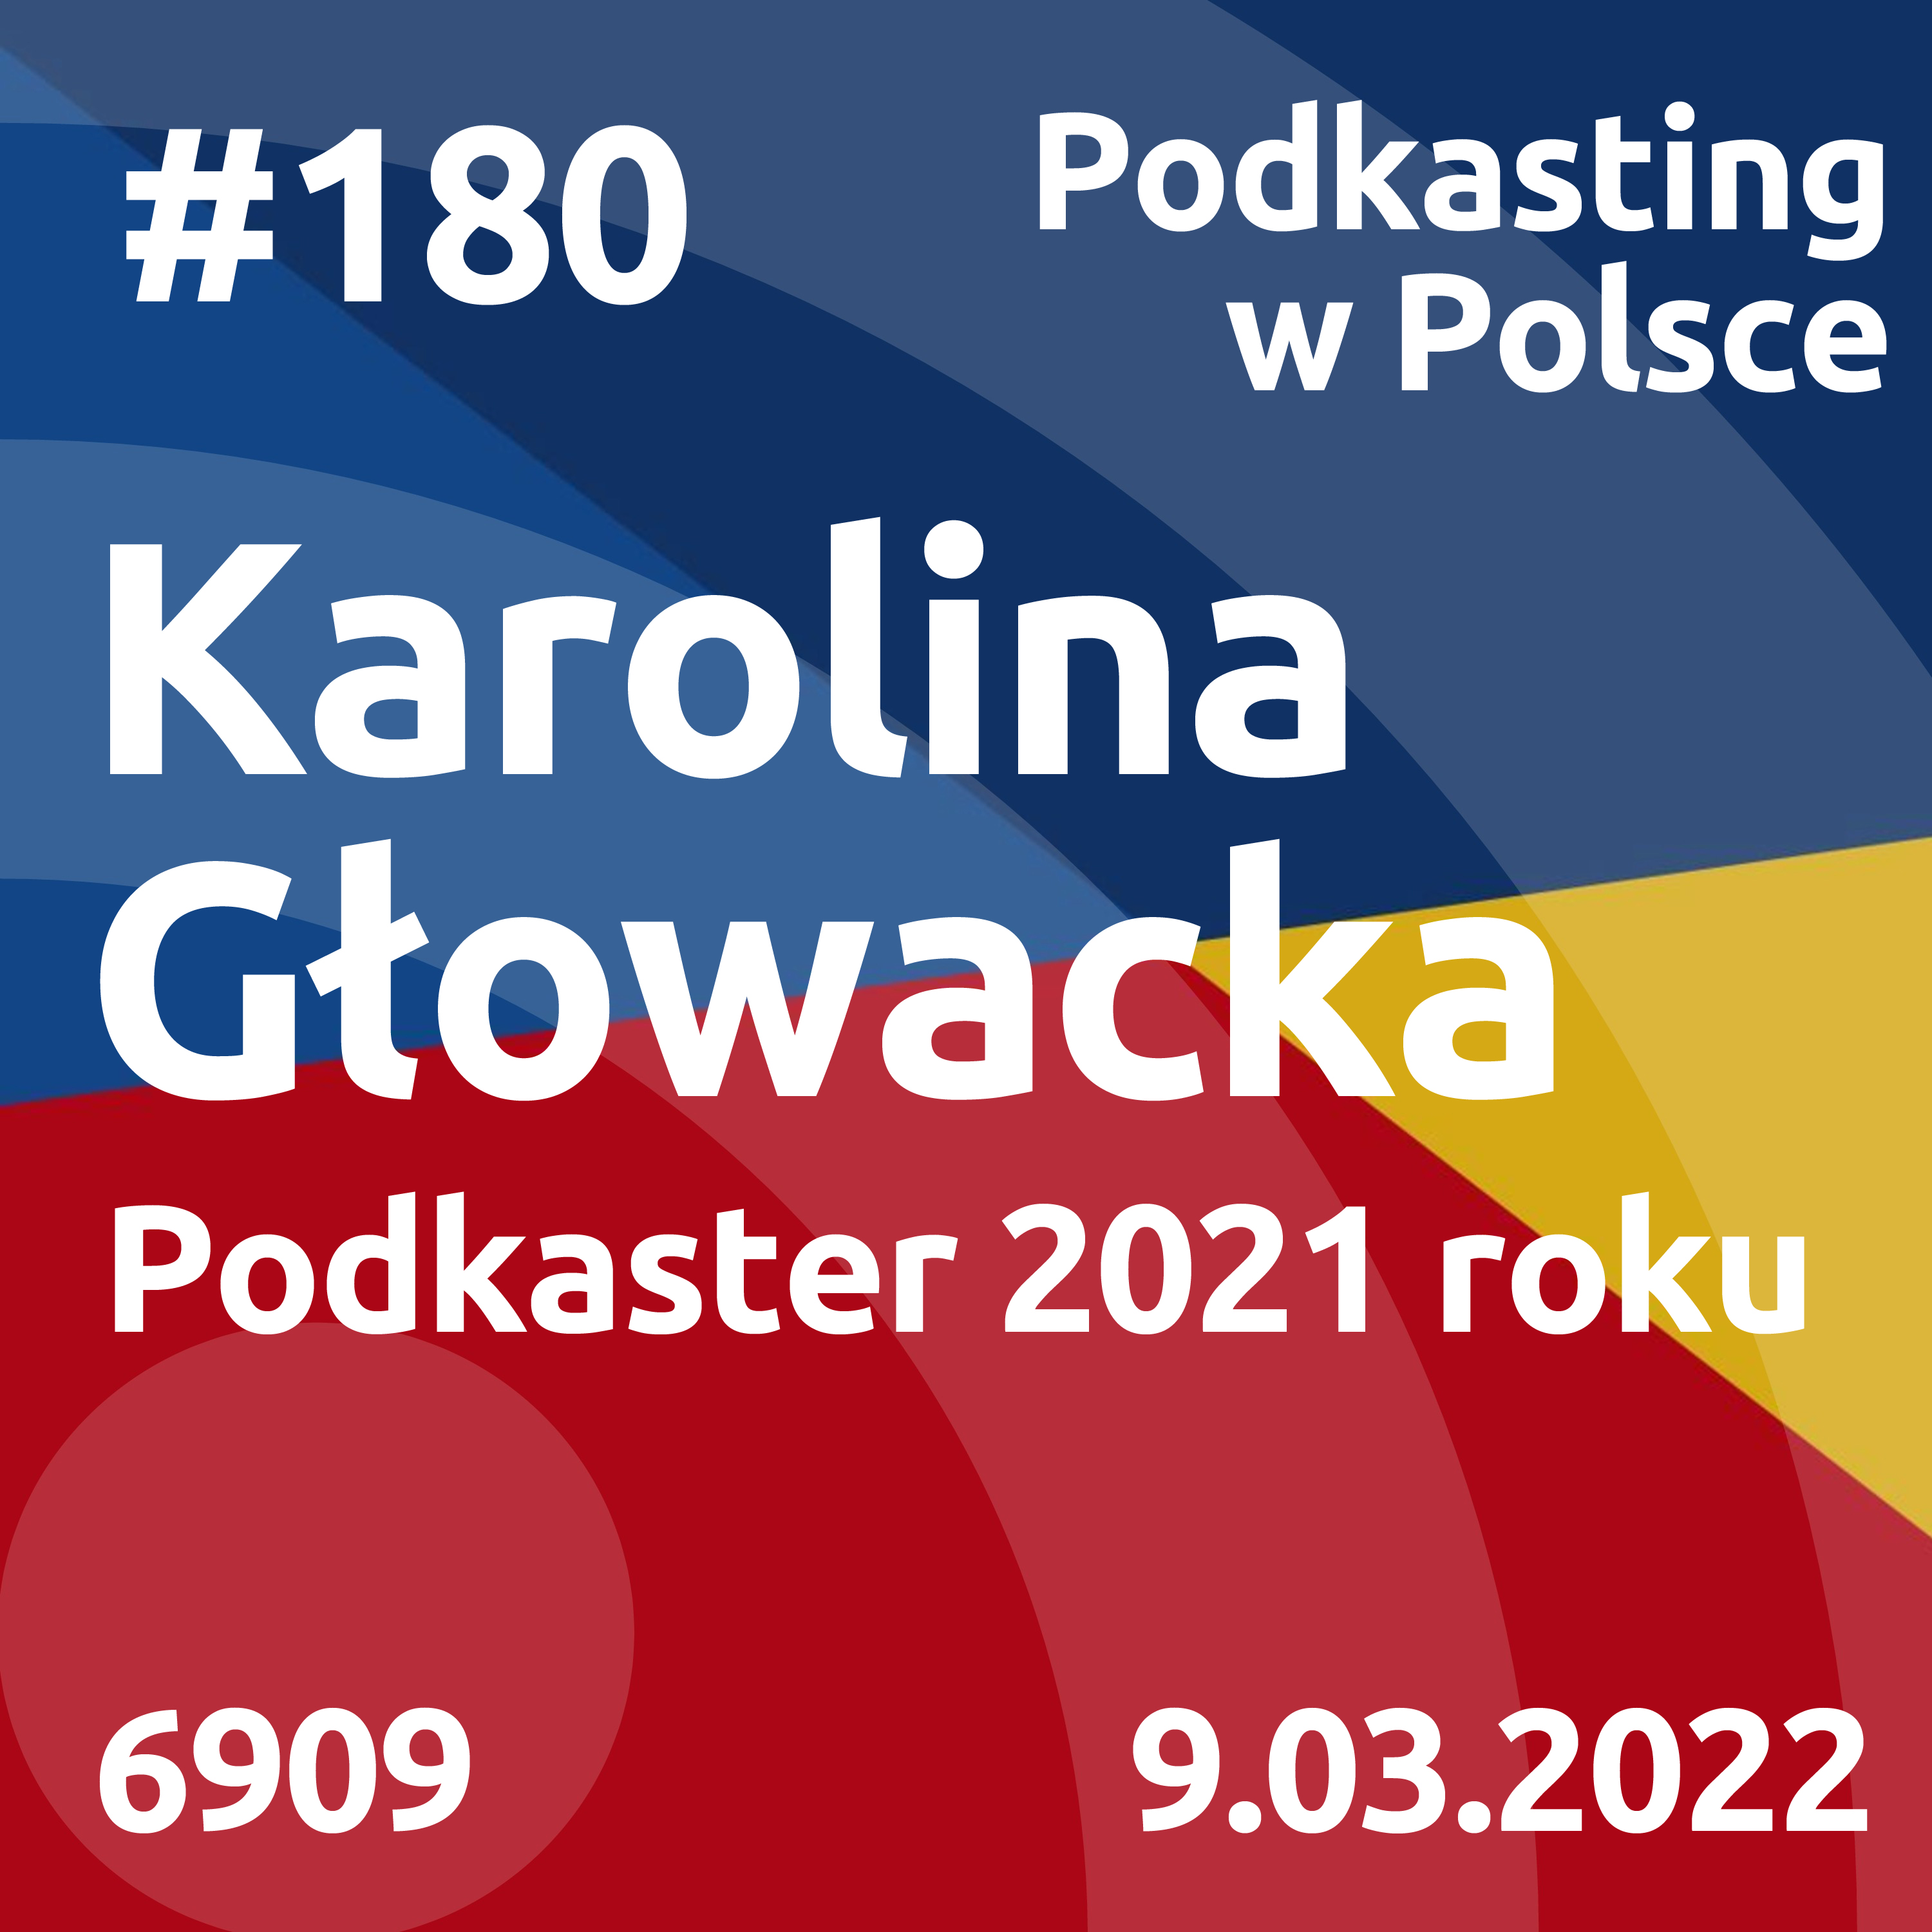 #180 - Karolina Głowacka. Podkaster 2021 roku